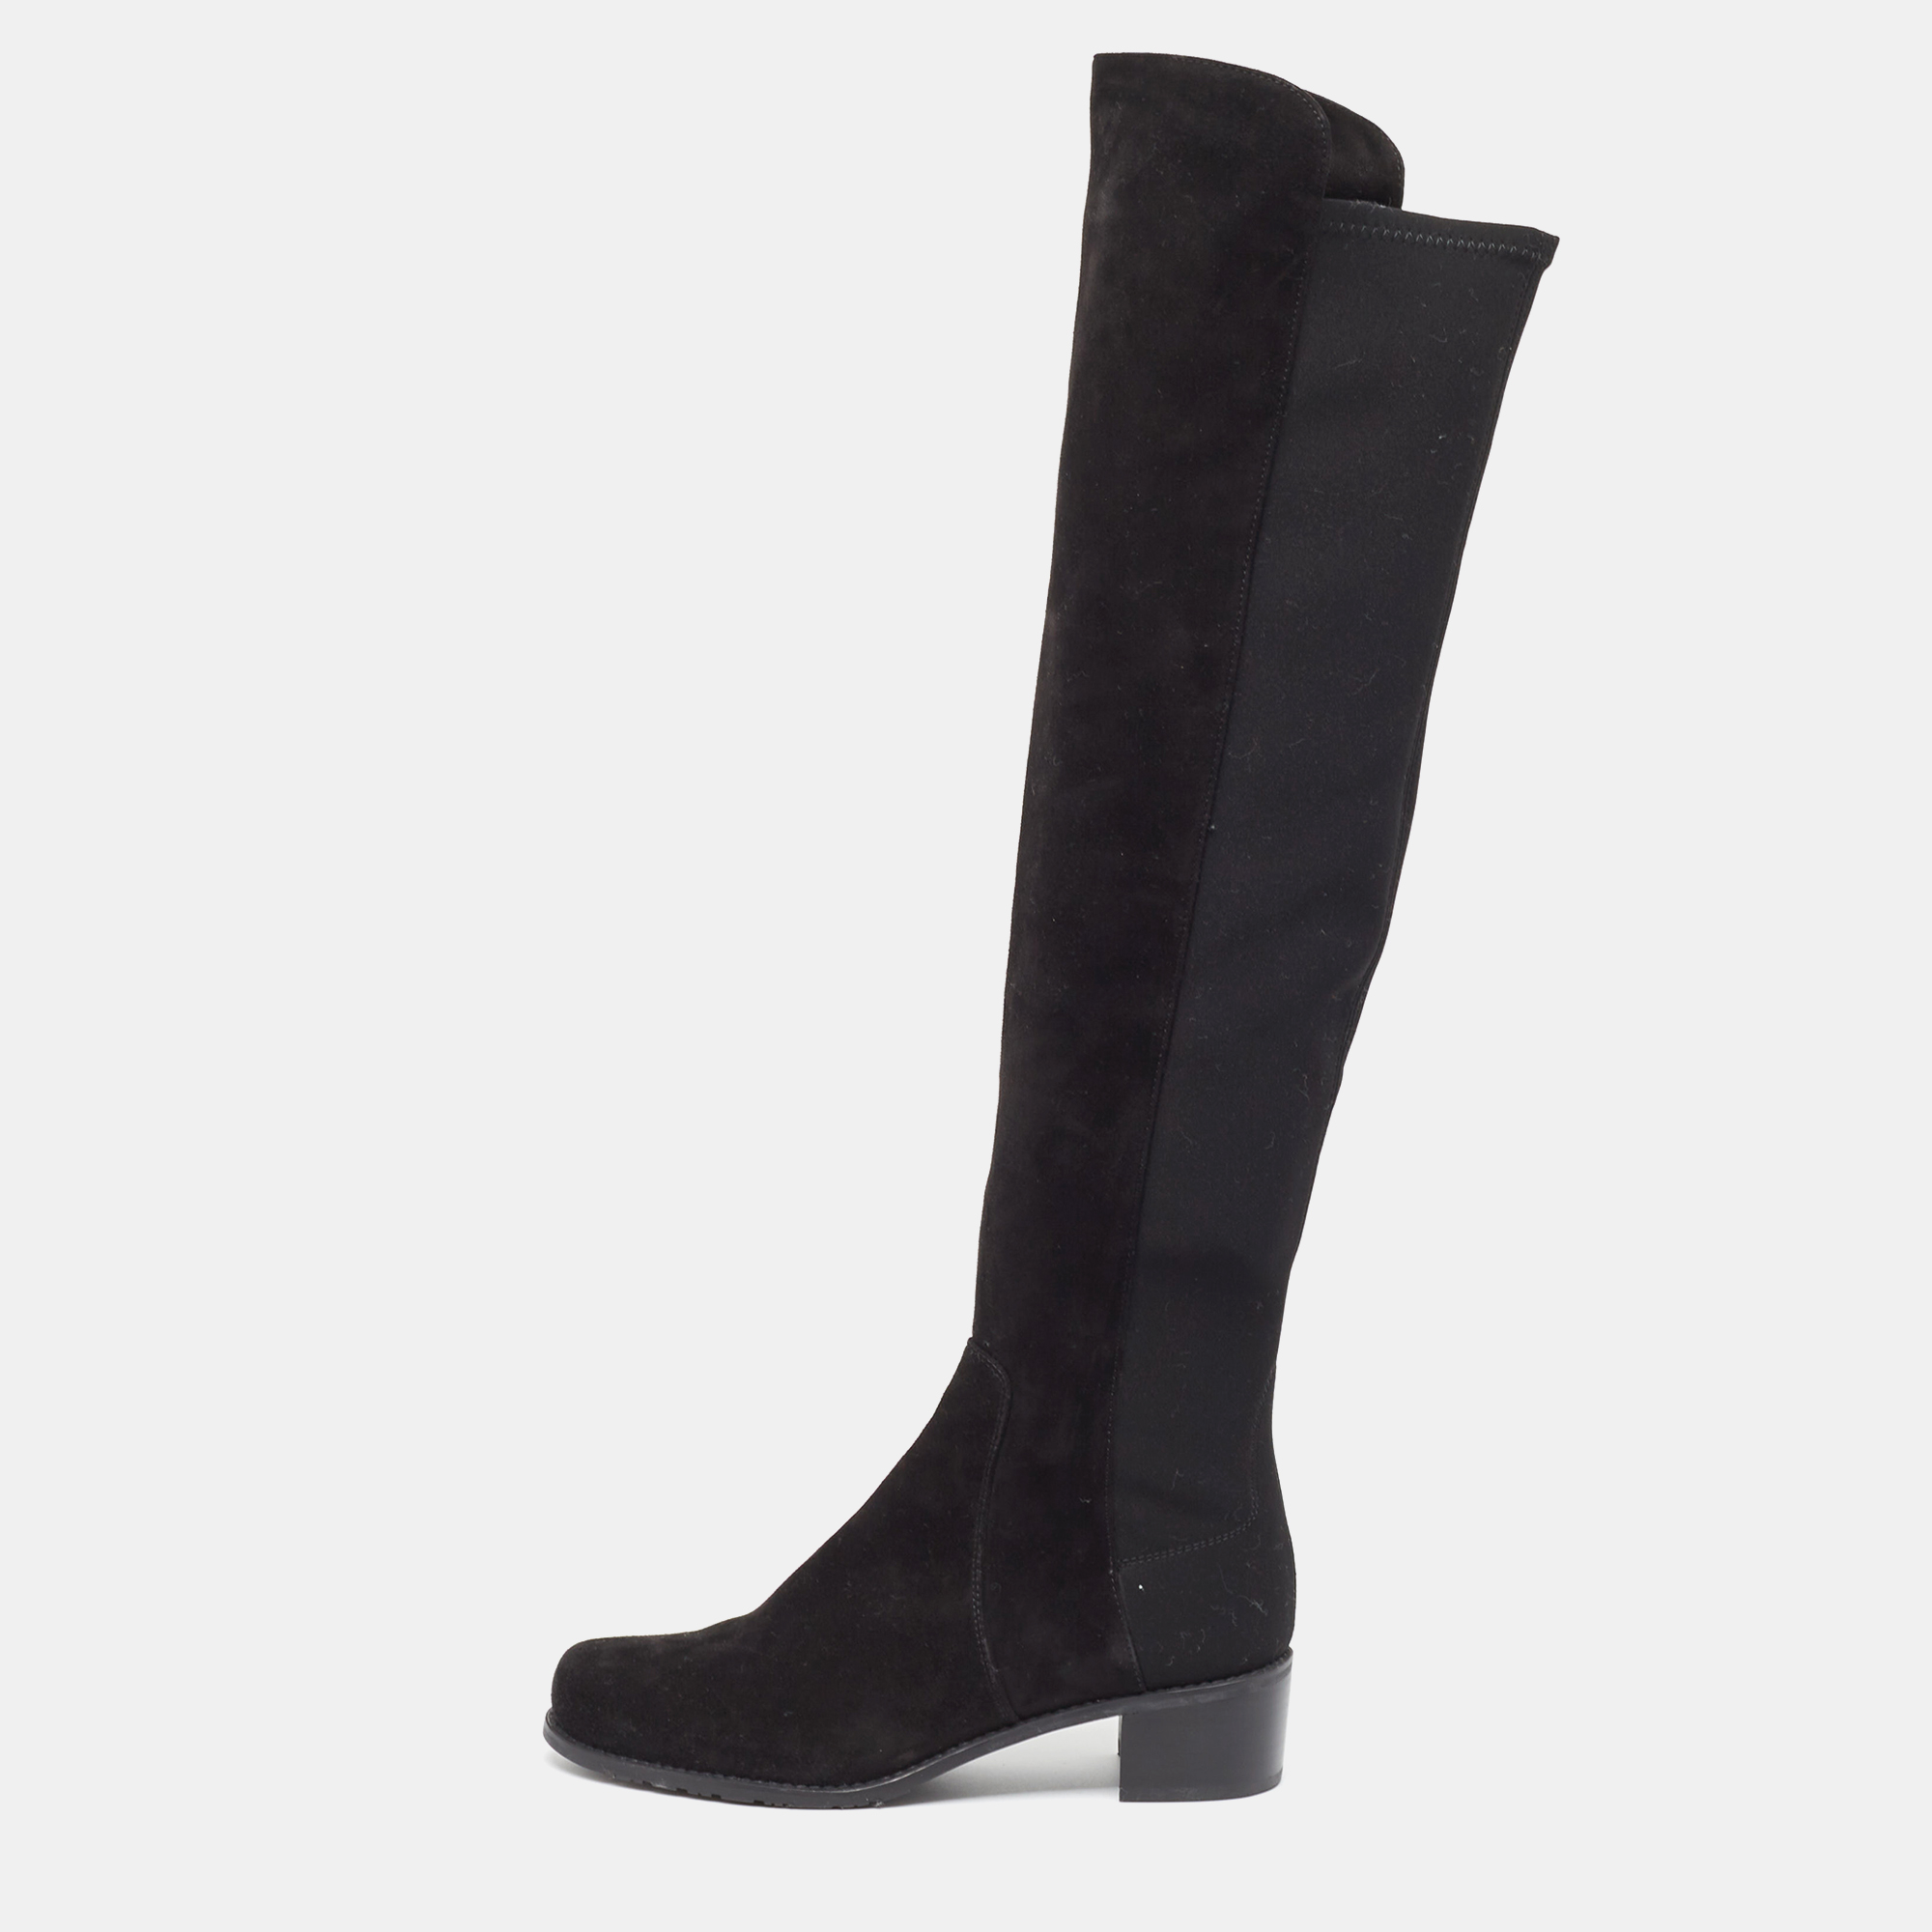 Stuart weitzman black suede and neoprene knee length boots size 37.5